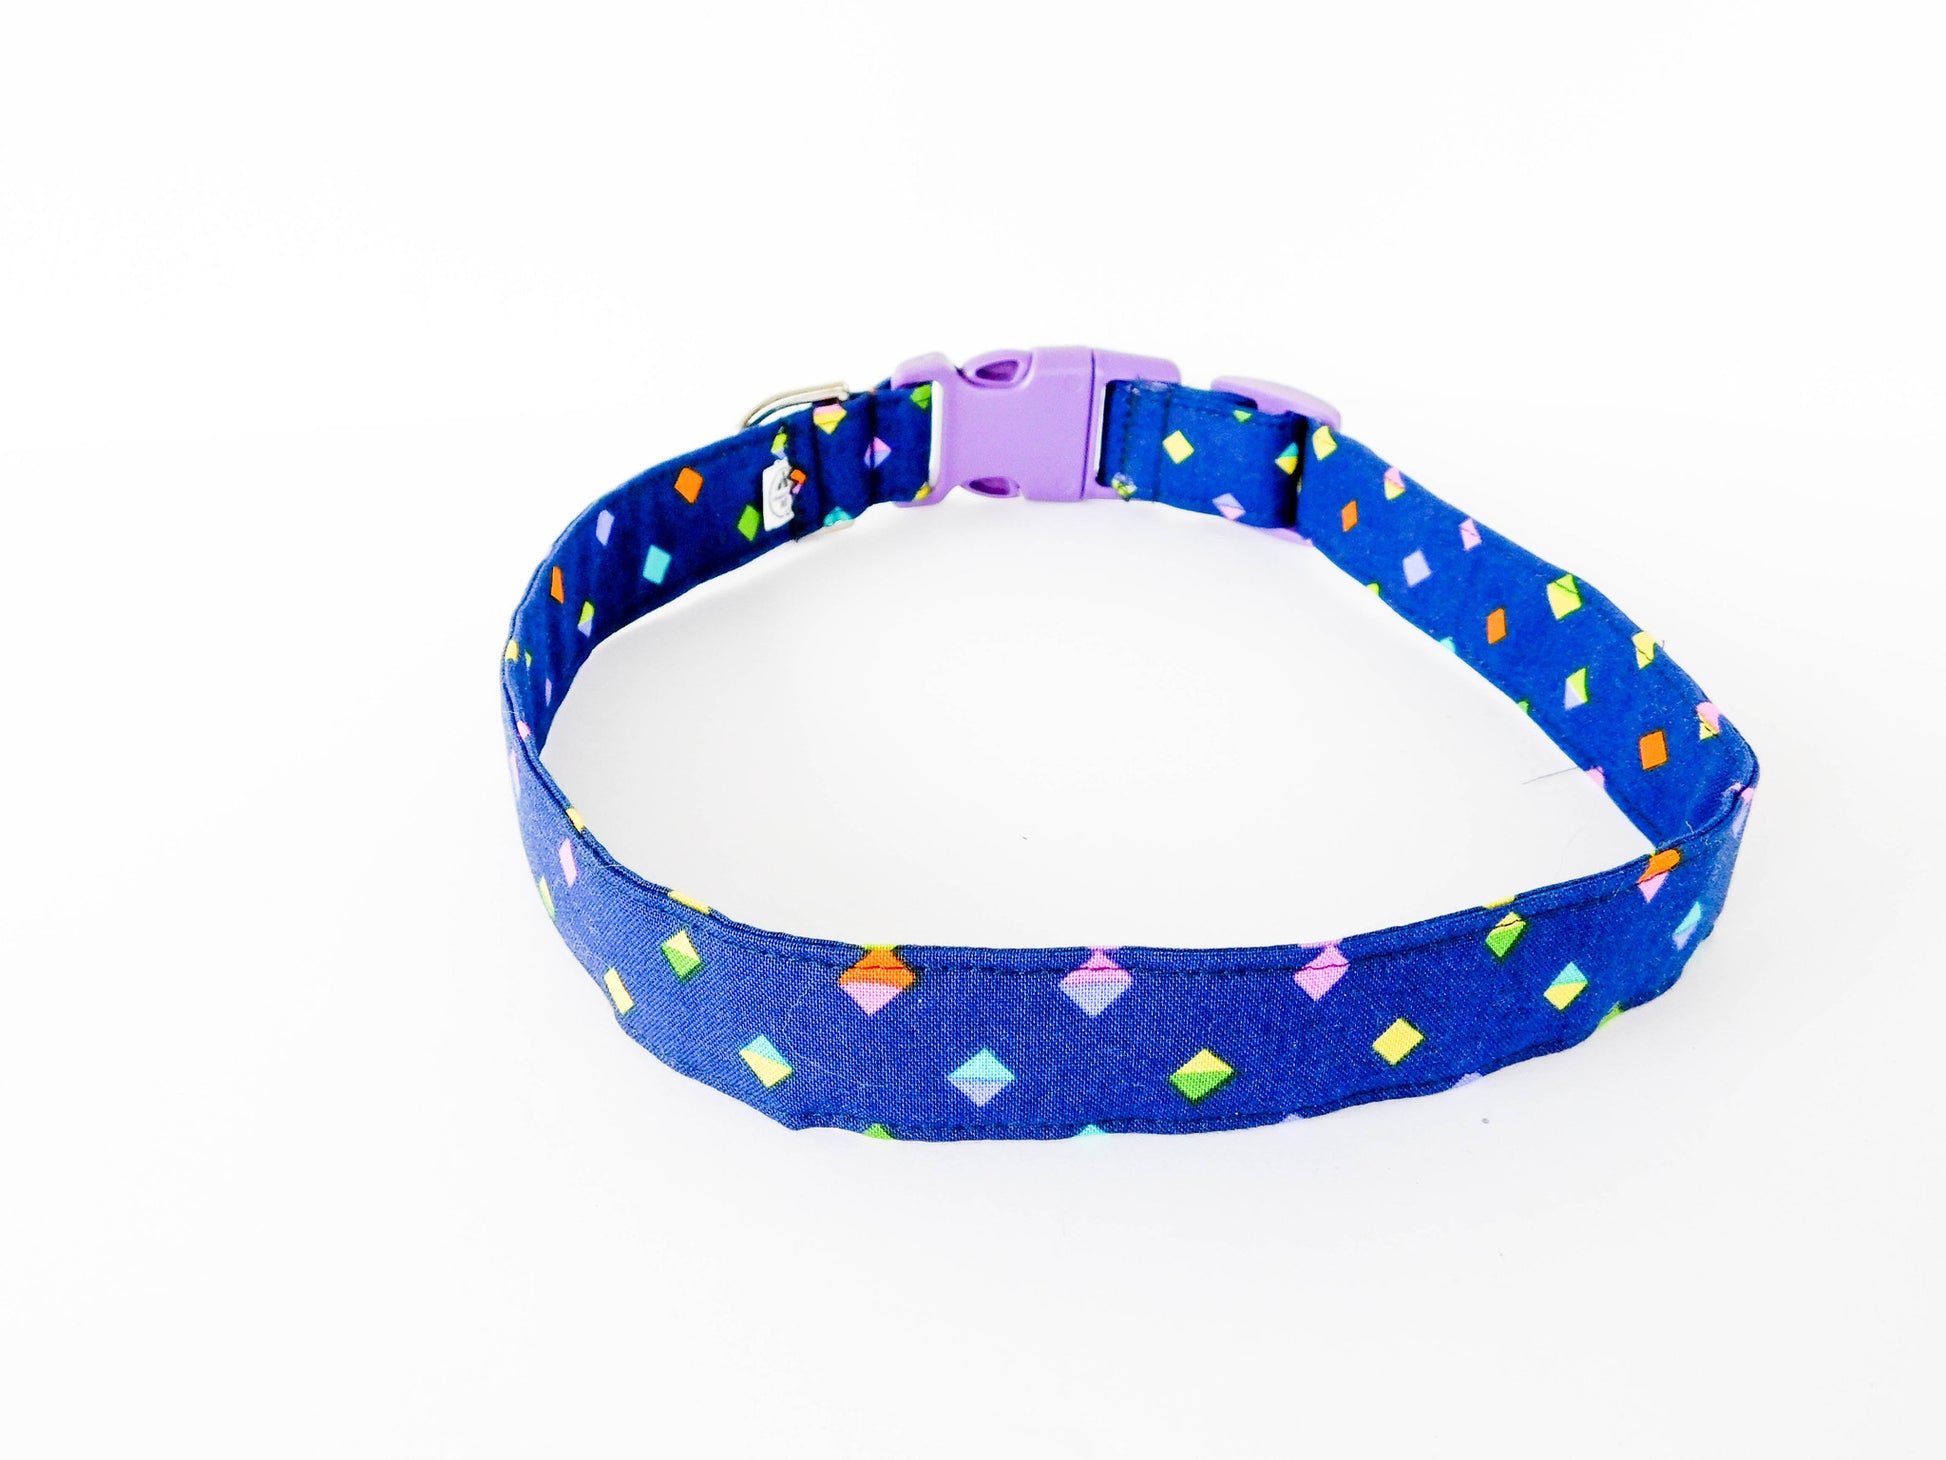 Navy Blue Diamond Collar - Charlotte's Pet